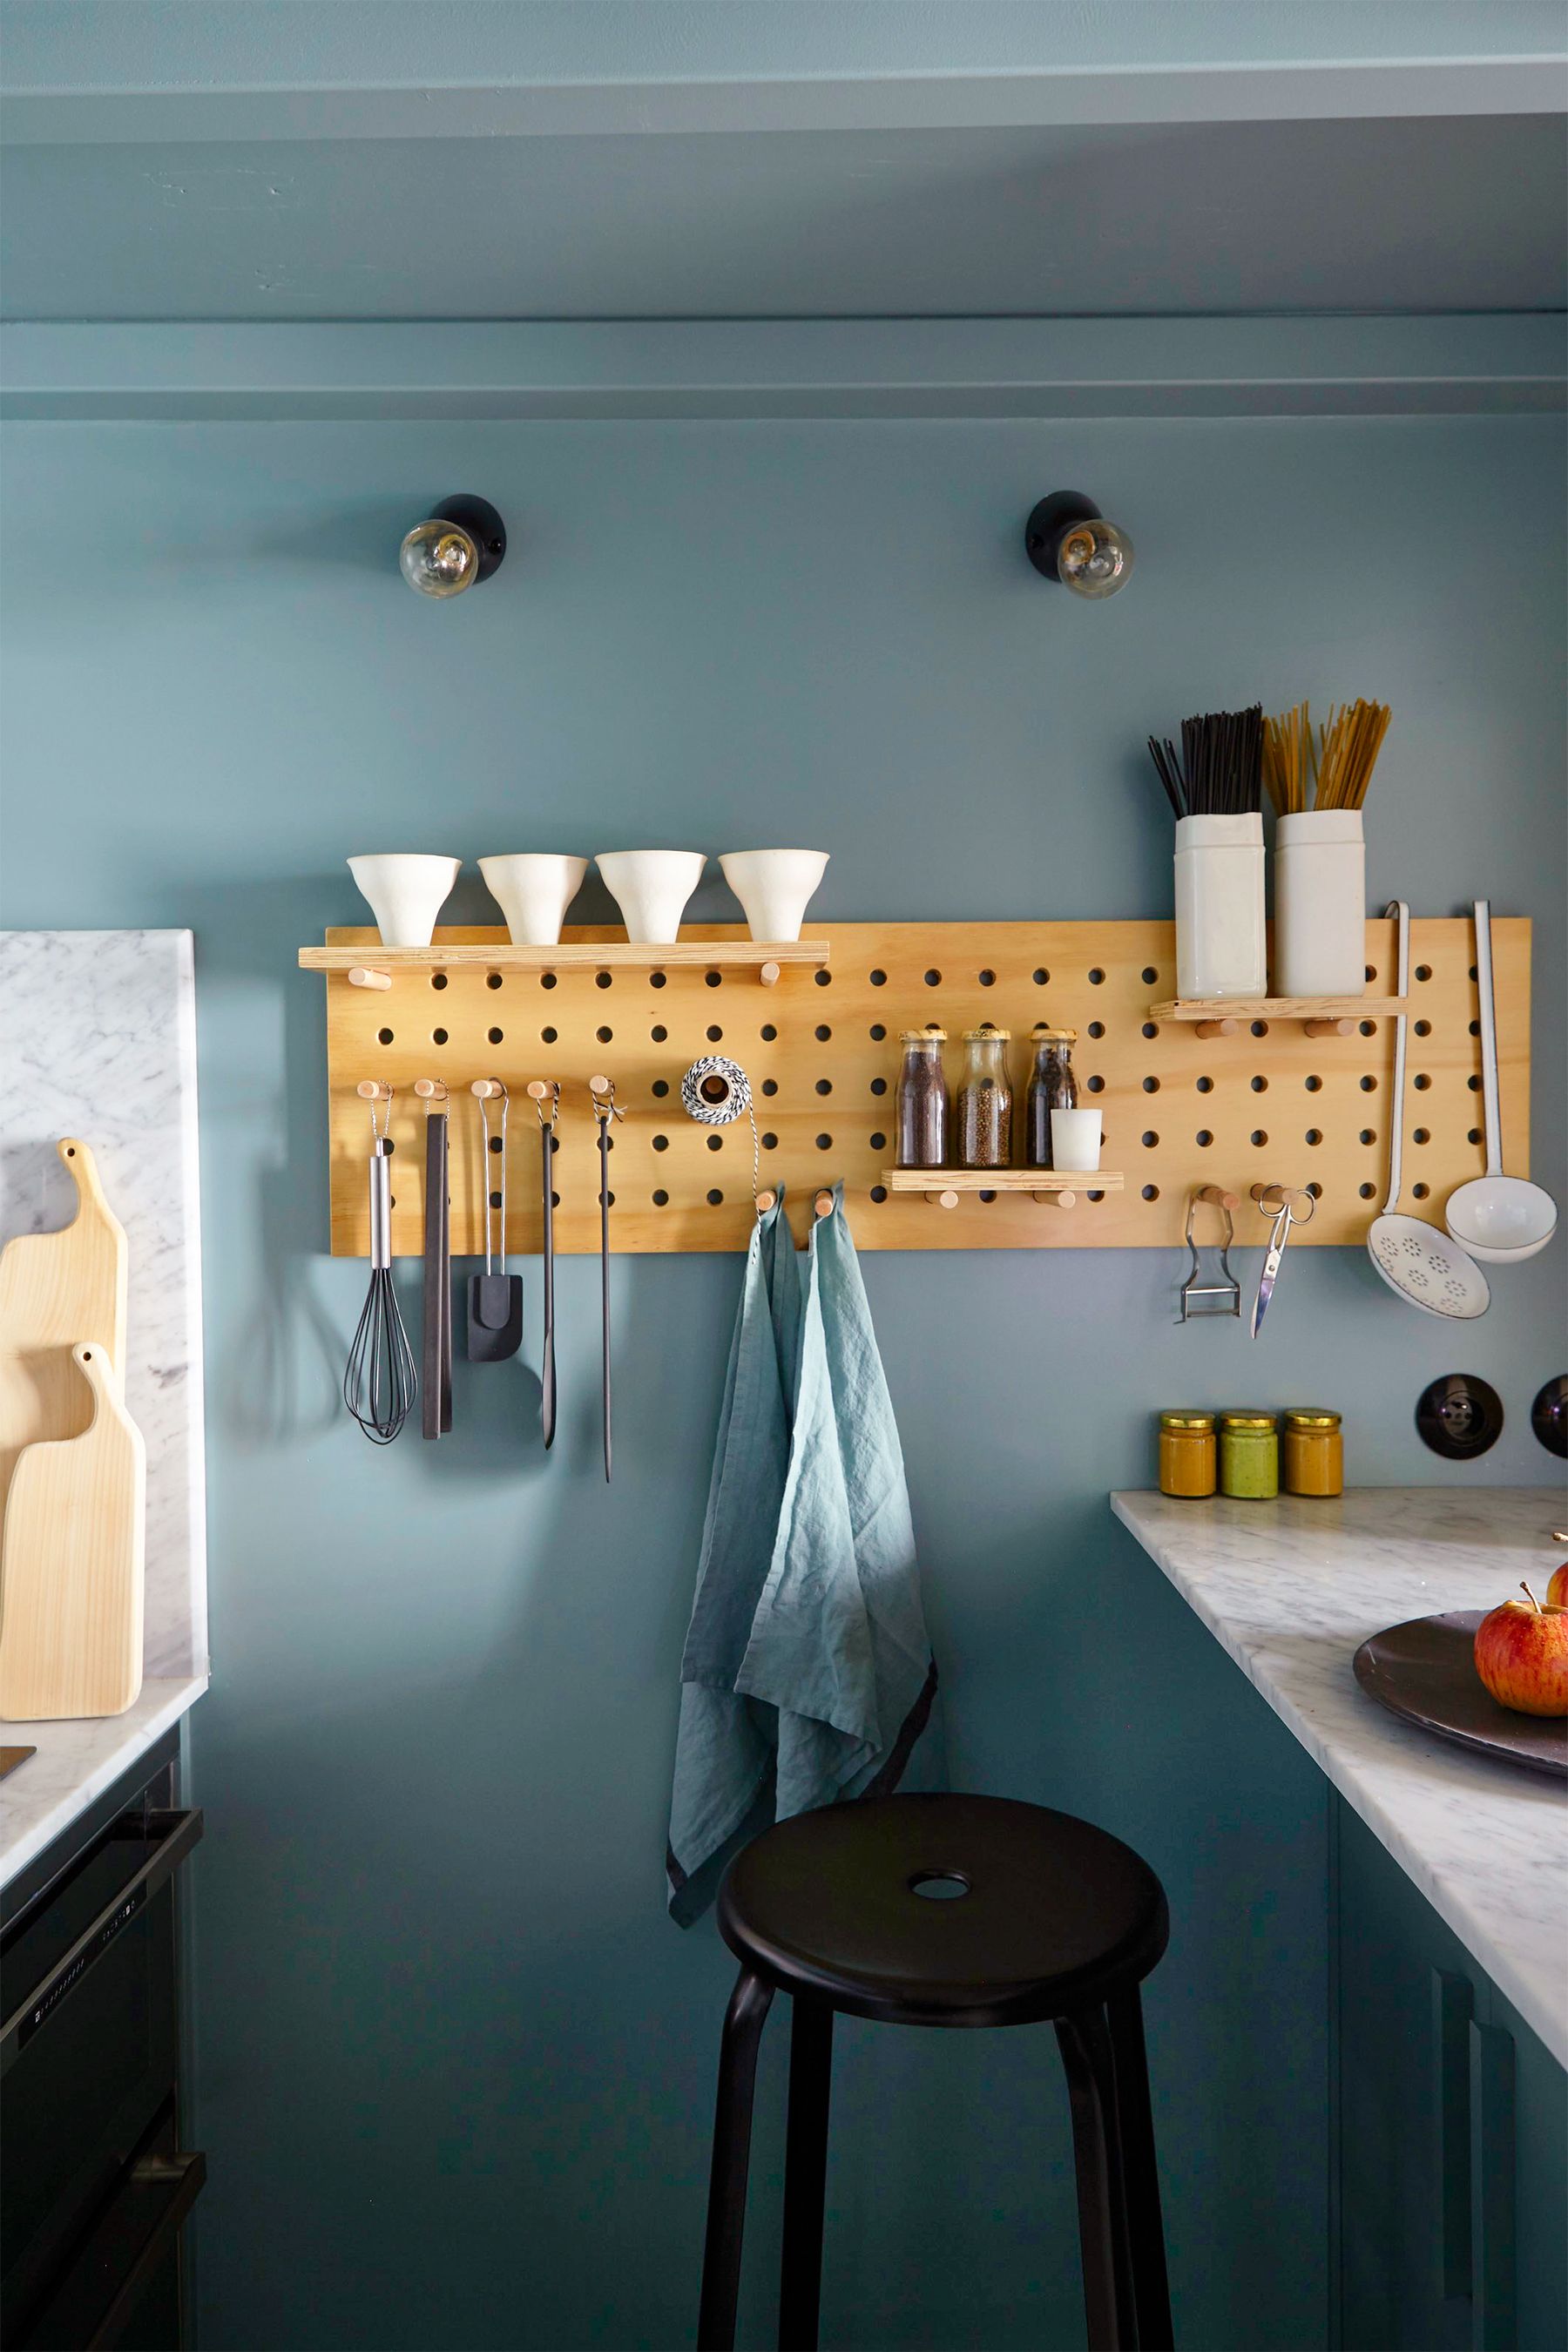 9 Ways to Use Wall Storage to Organize Your Kitchen